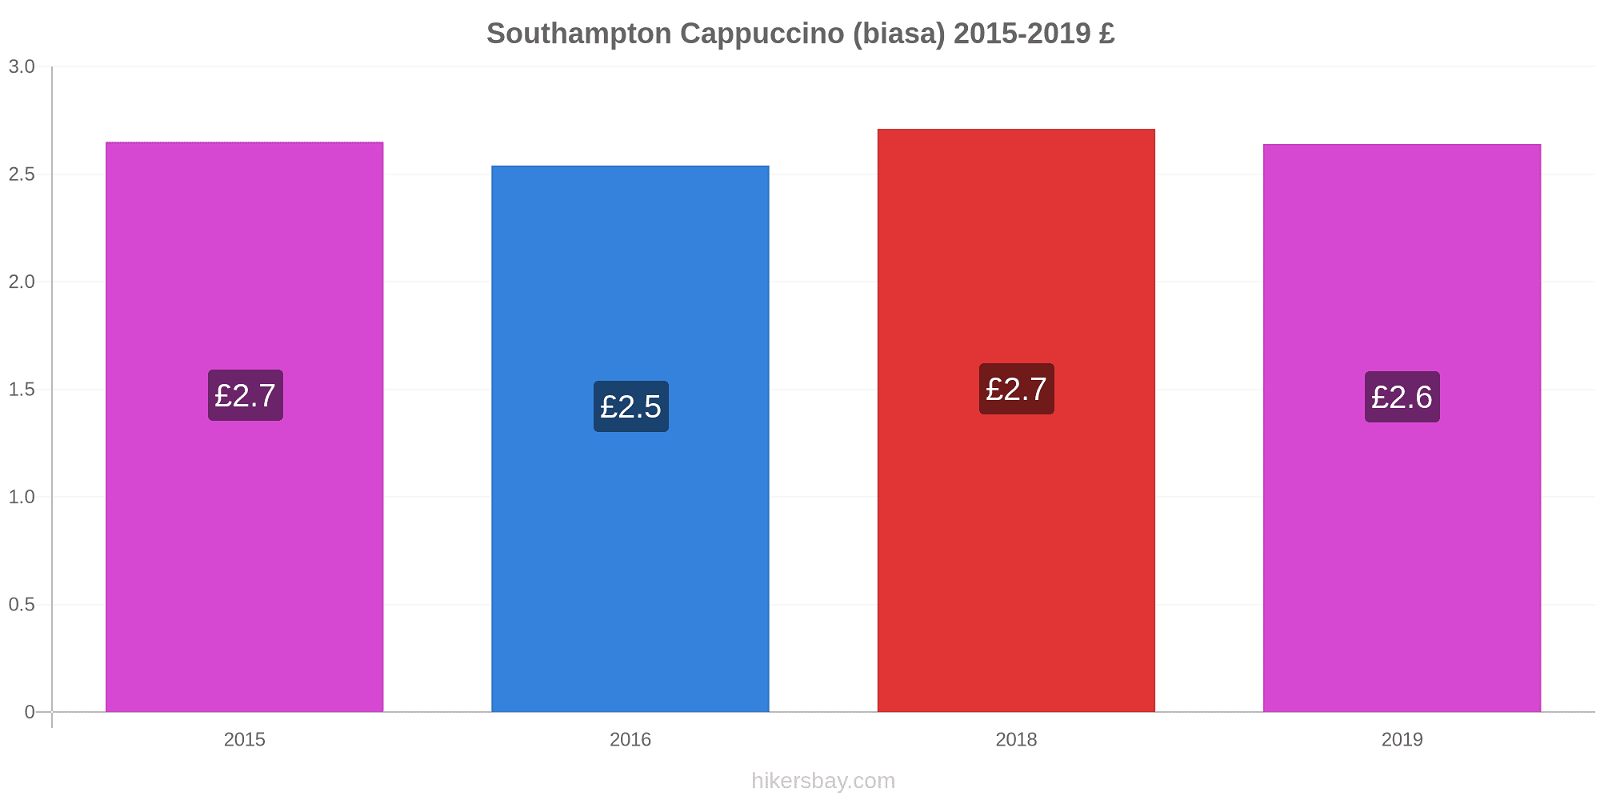 Southampton perubahan harga Cappuccino (biasa) hikersbay.com